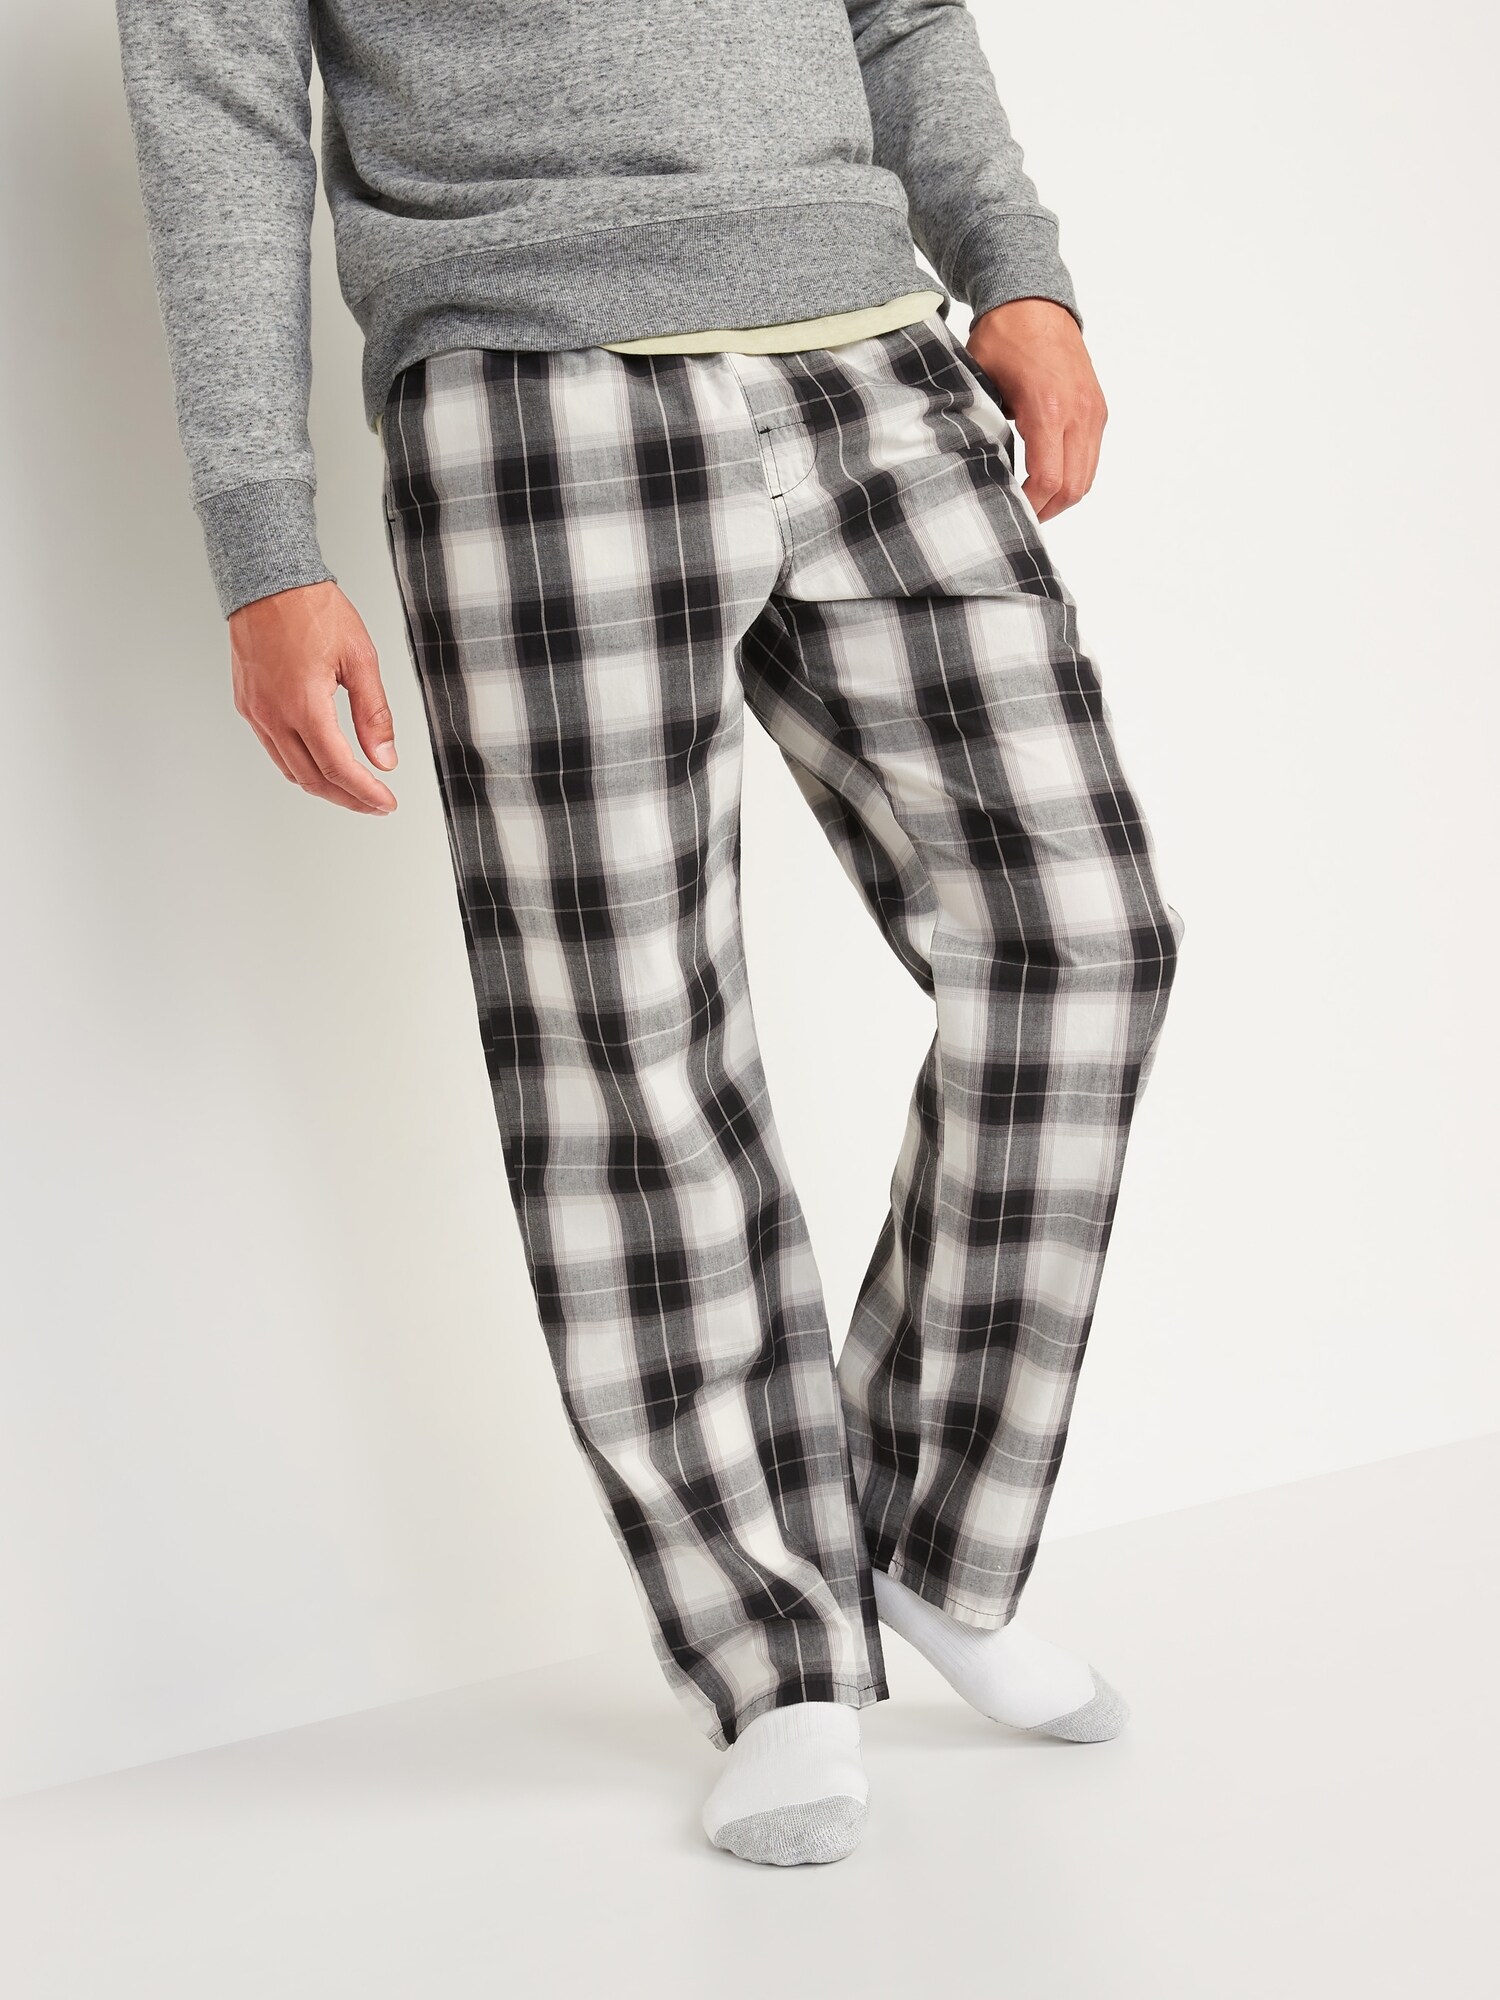 Old Navy Pajama Pants